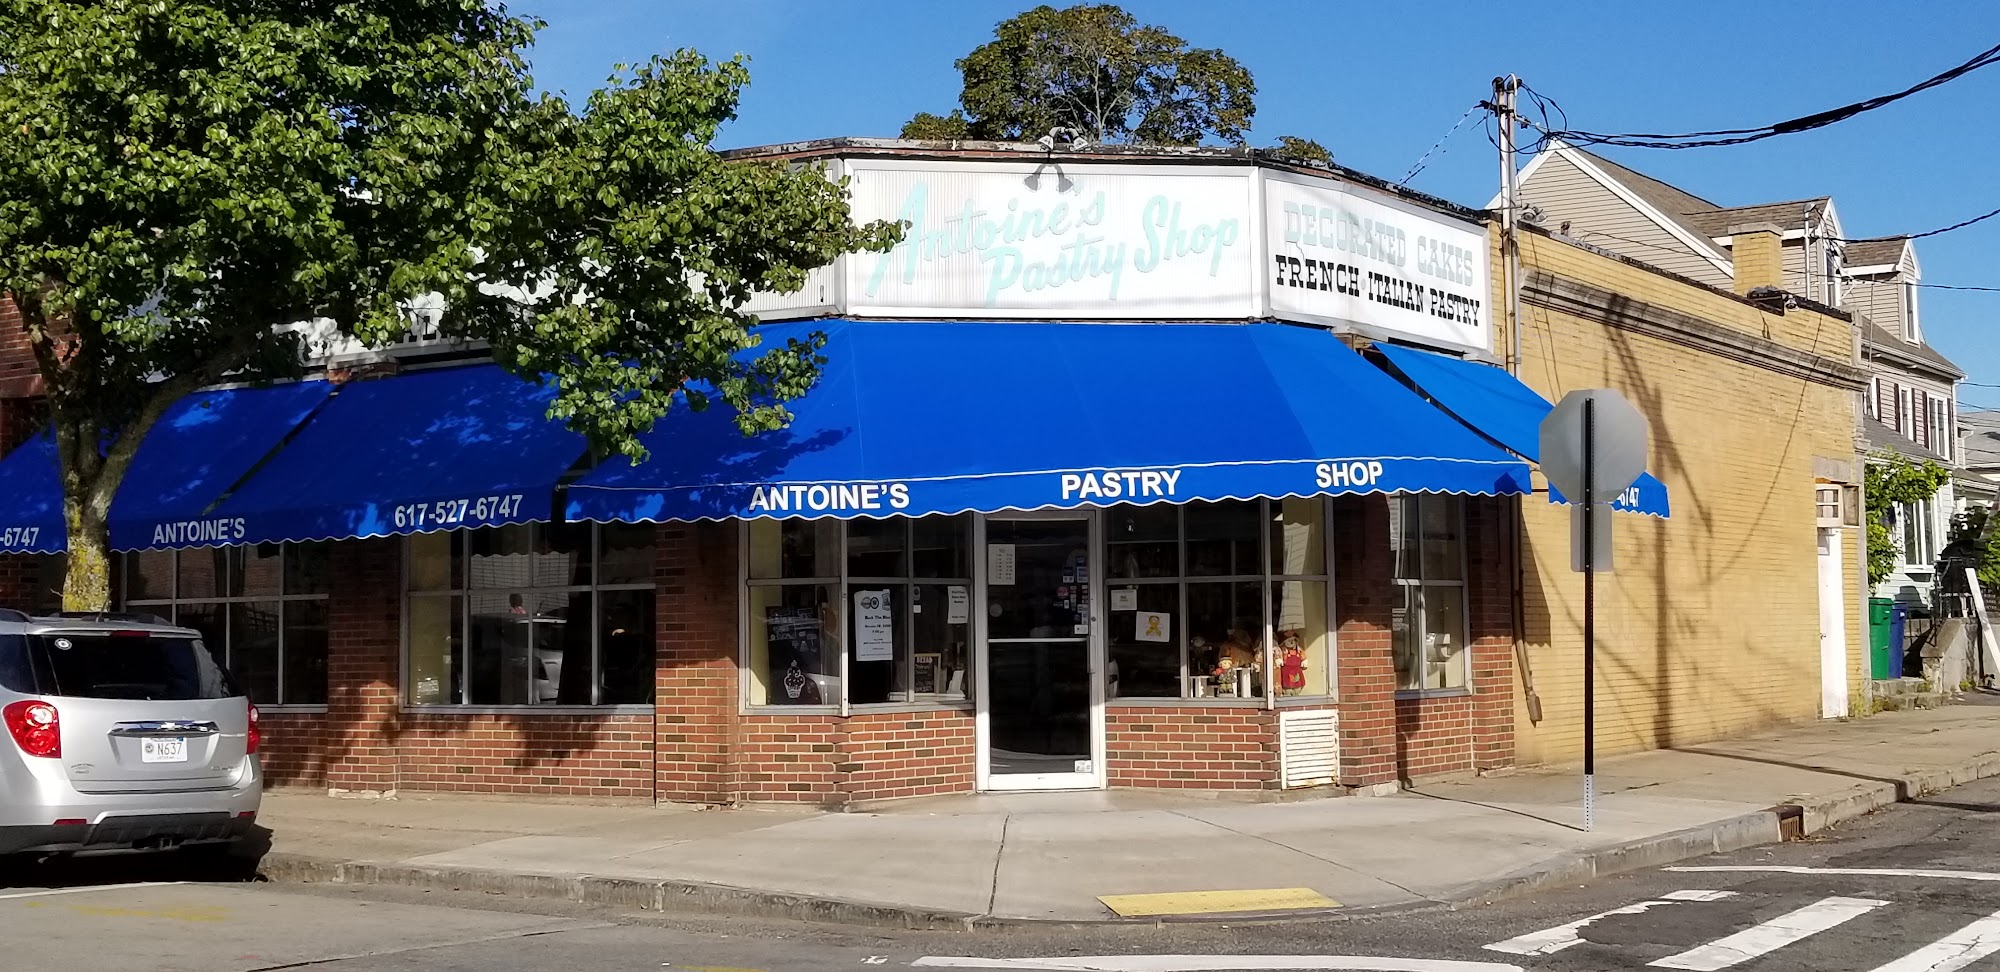 Antoines Pastry Shop